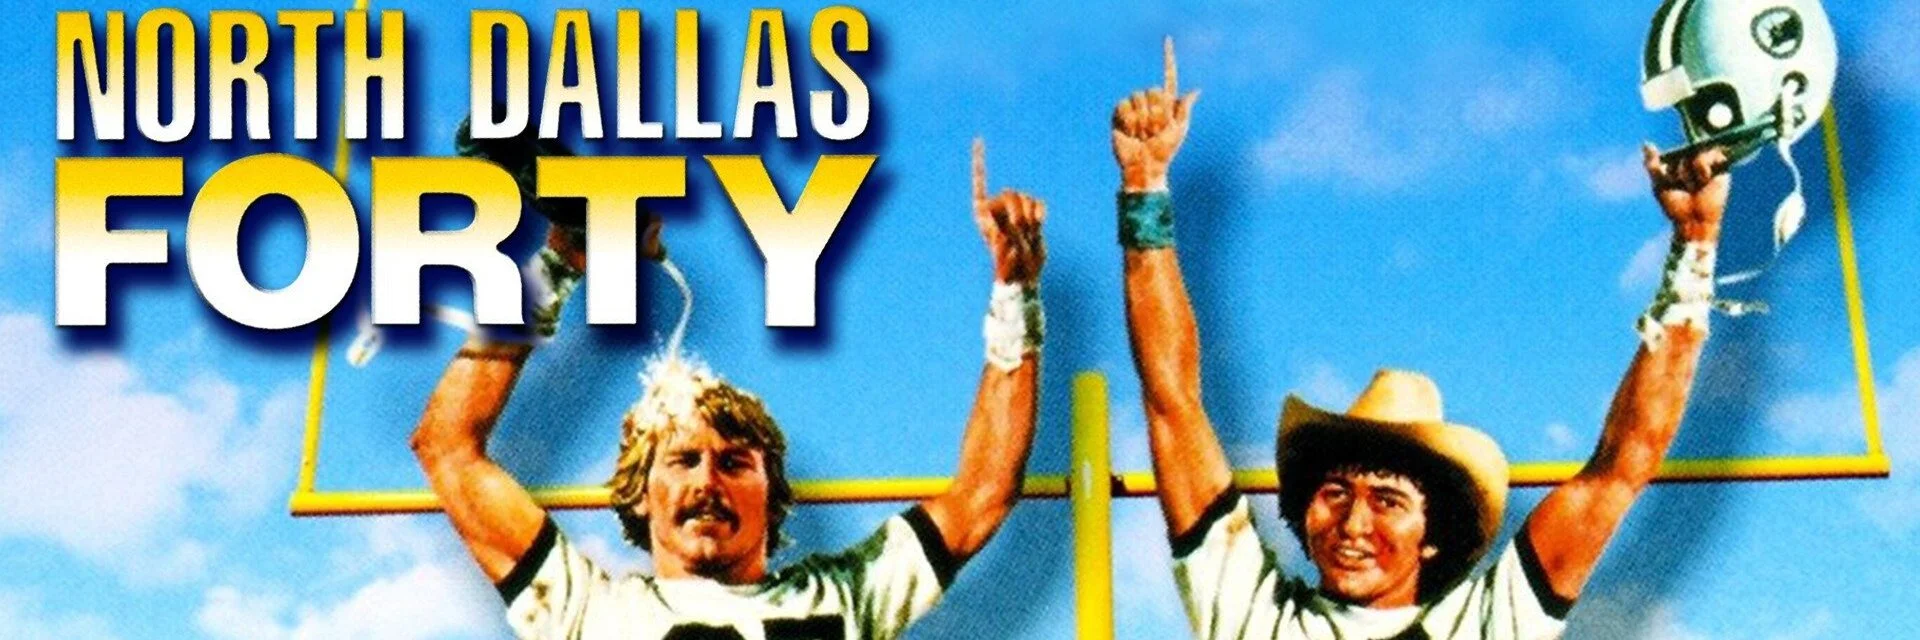 North Dallas Forty 4K 1979 big poster